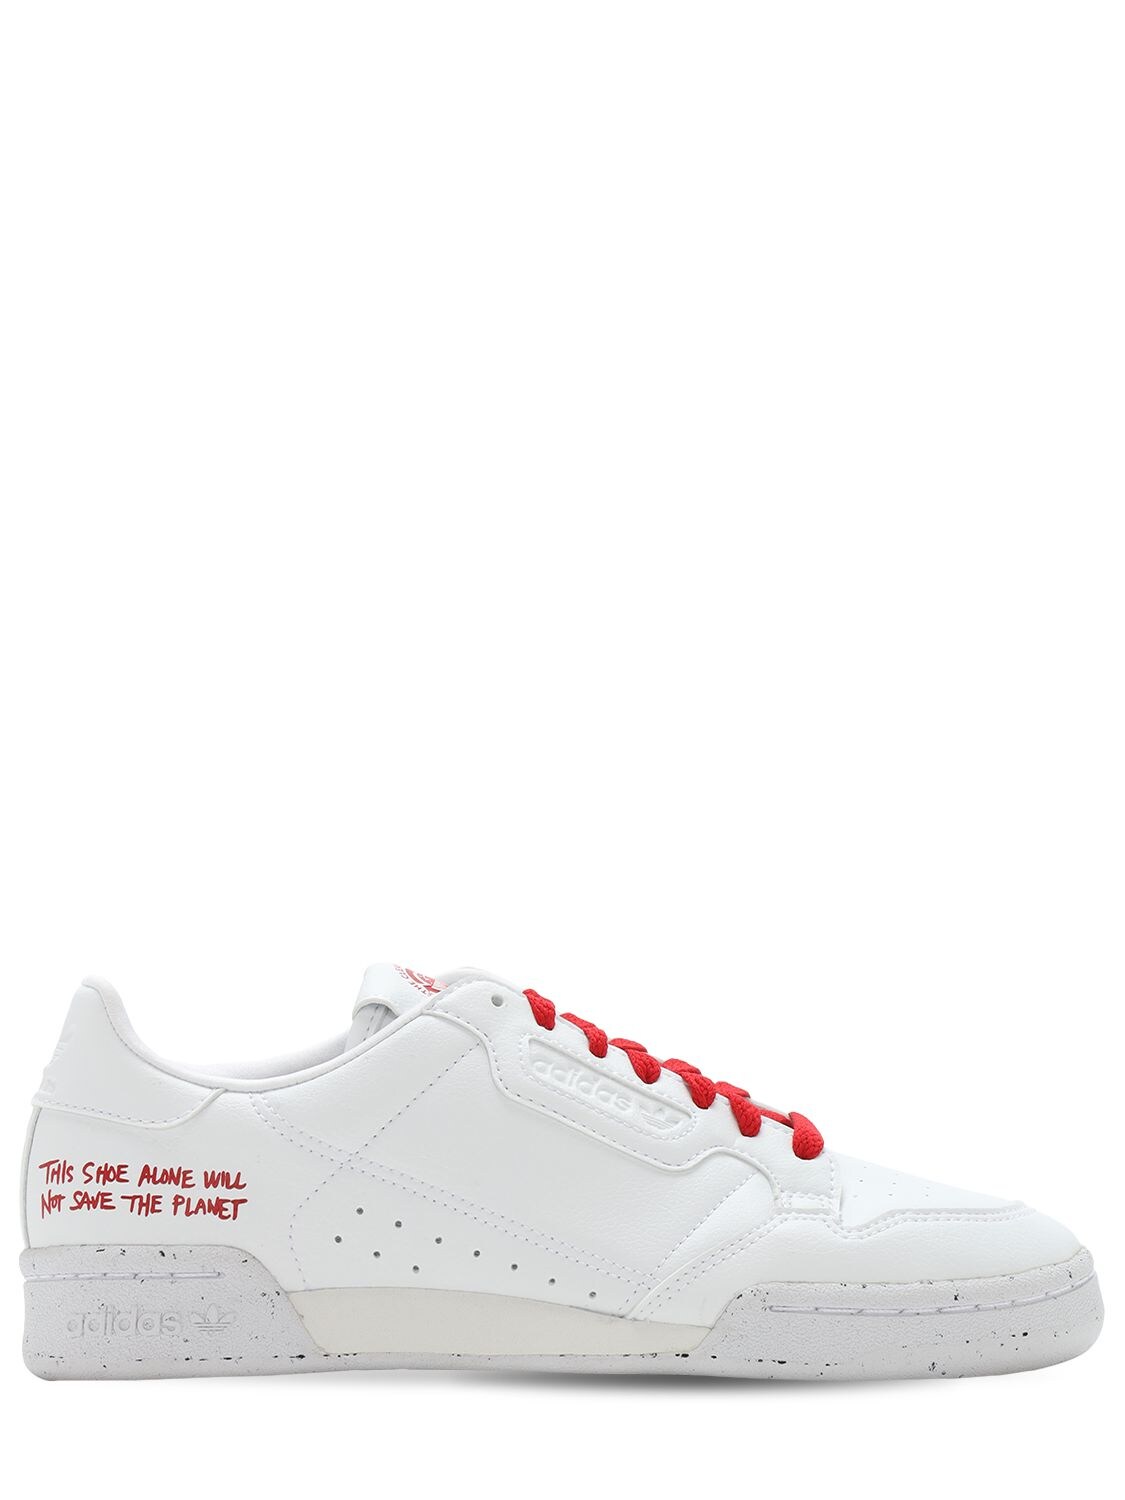 Adidas Originals Continental 80 Vegan Sneakers In White